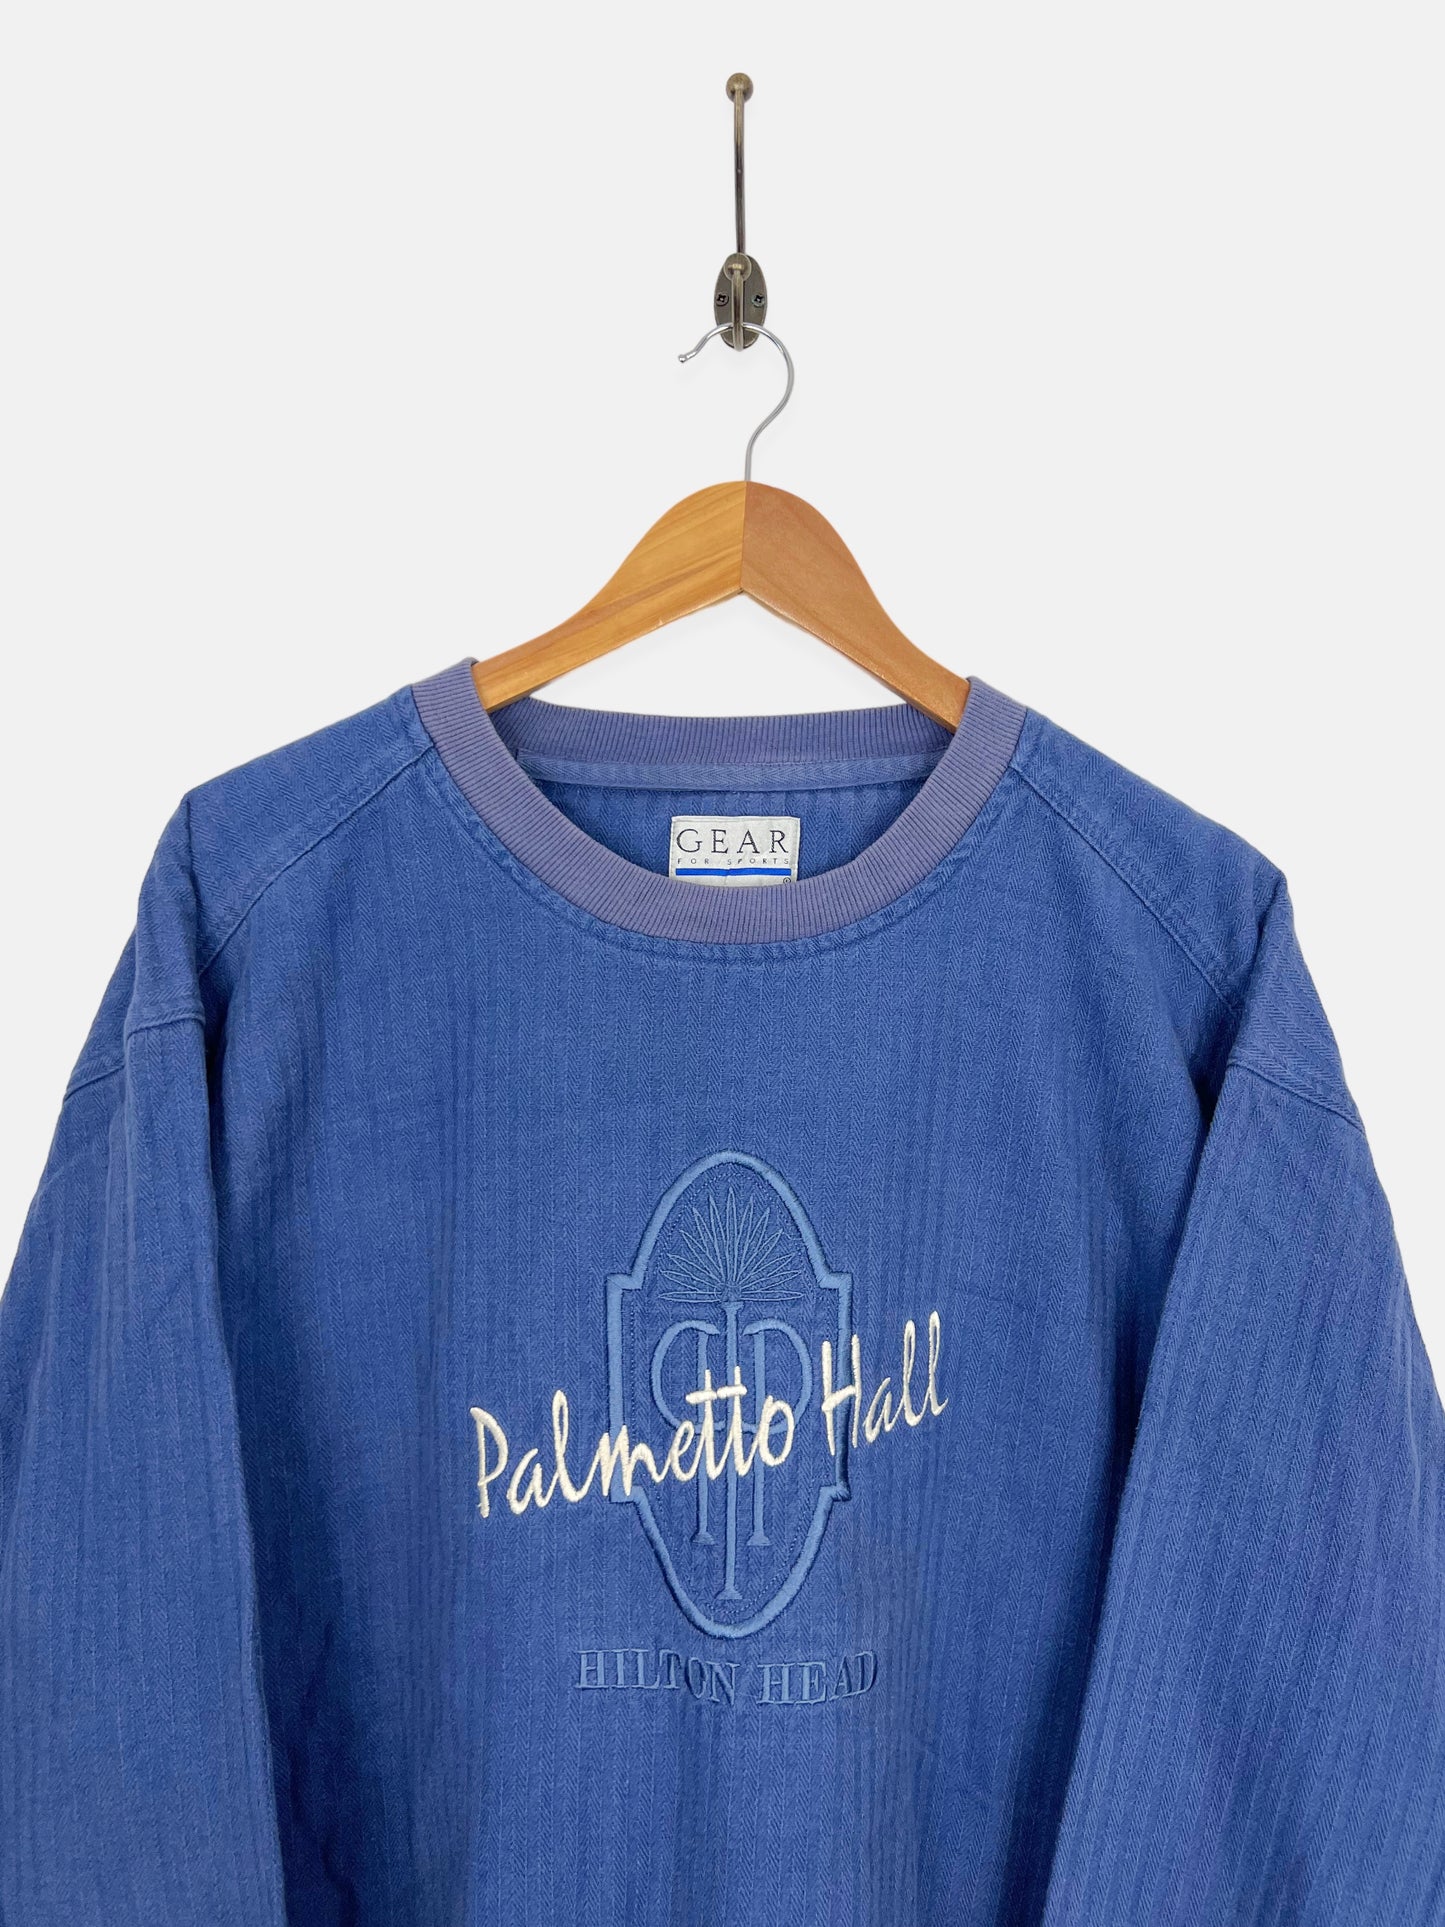 90's Palmetto Hill Hilton Head Embroidered Vintage Sweatshirt Size M-L